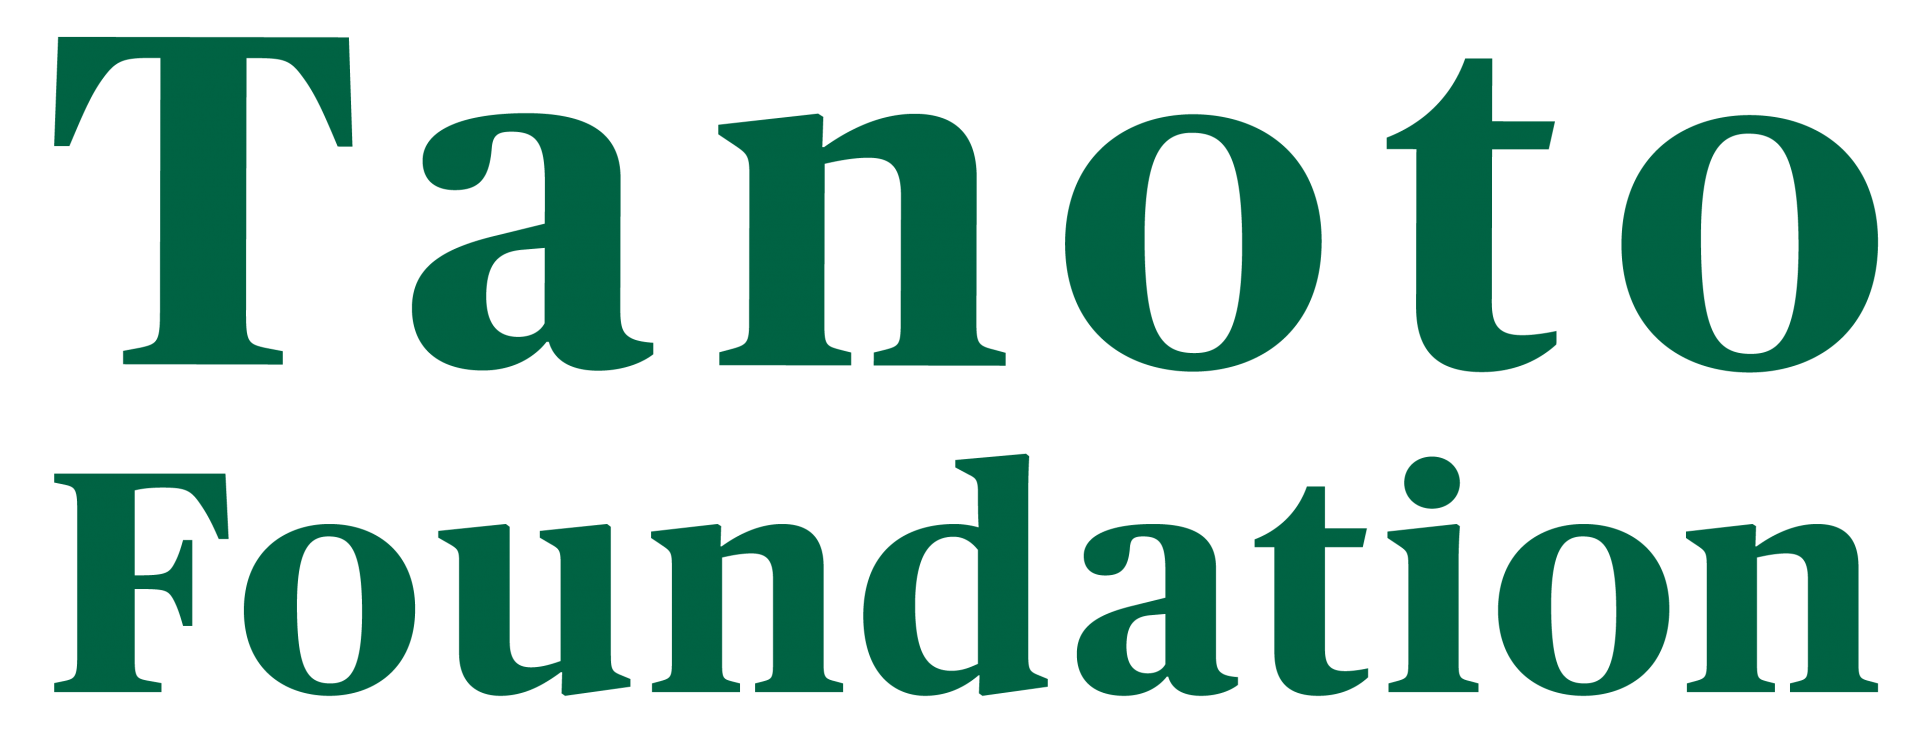 Tanoto Foundation Trains 800 Facilitators to Overcome Learning Loss